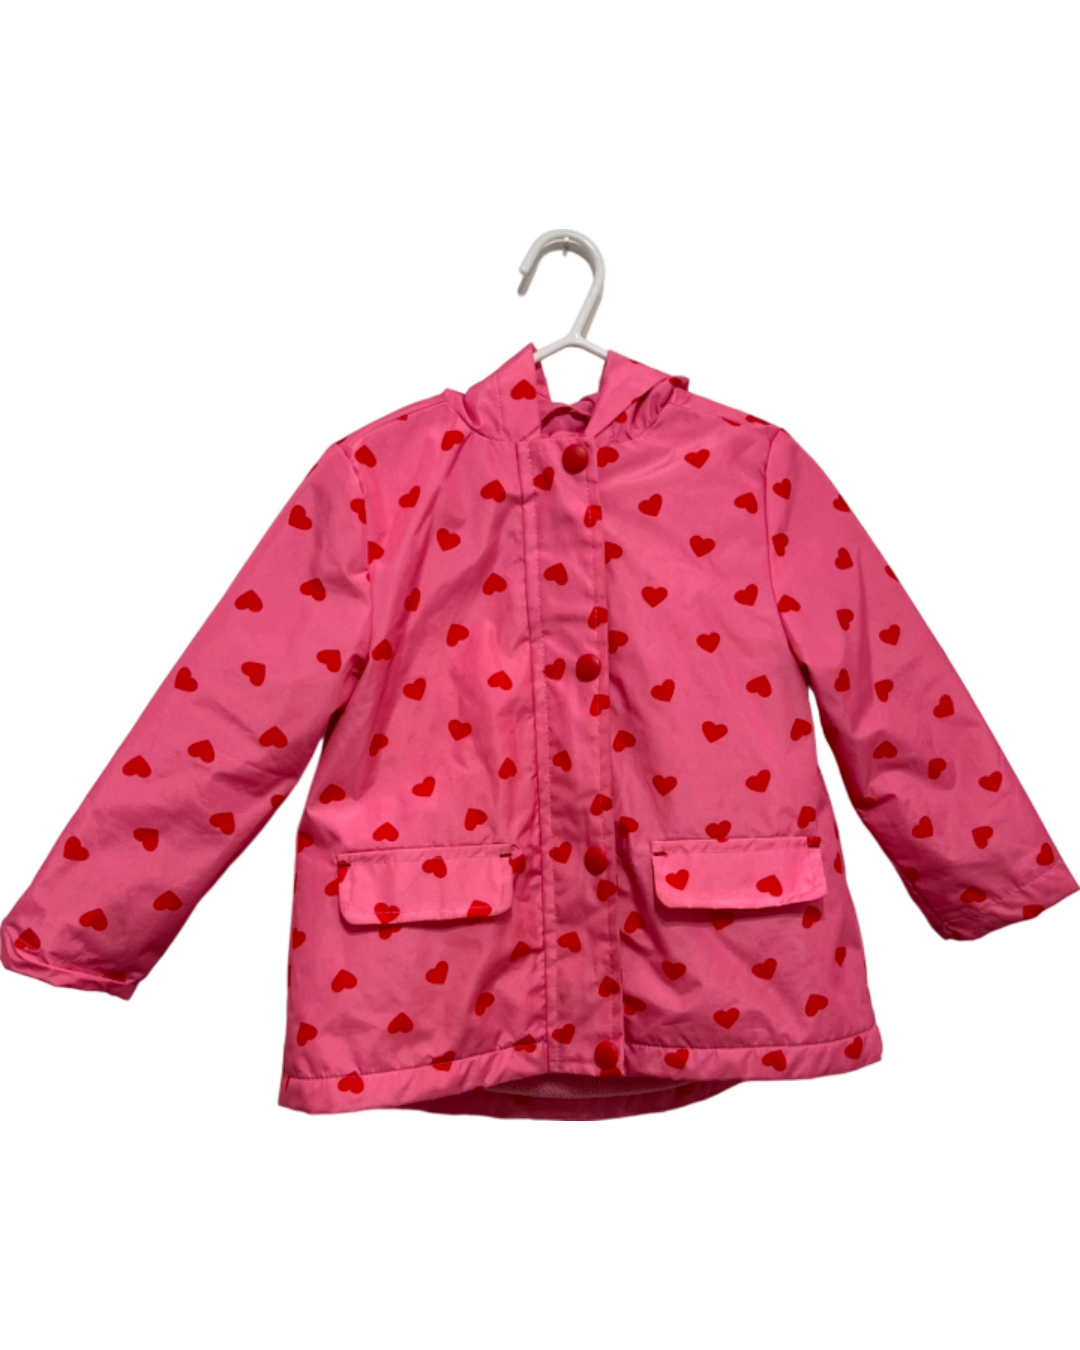 Pink Heart Rain Jacket (18-24M)